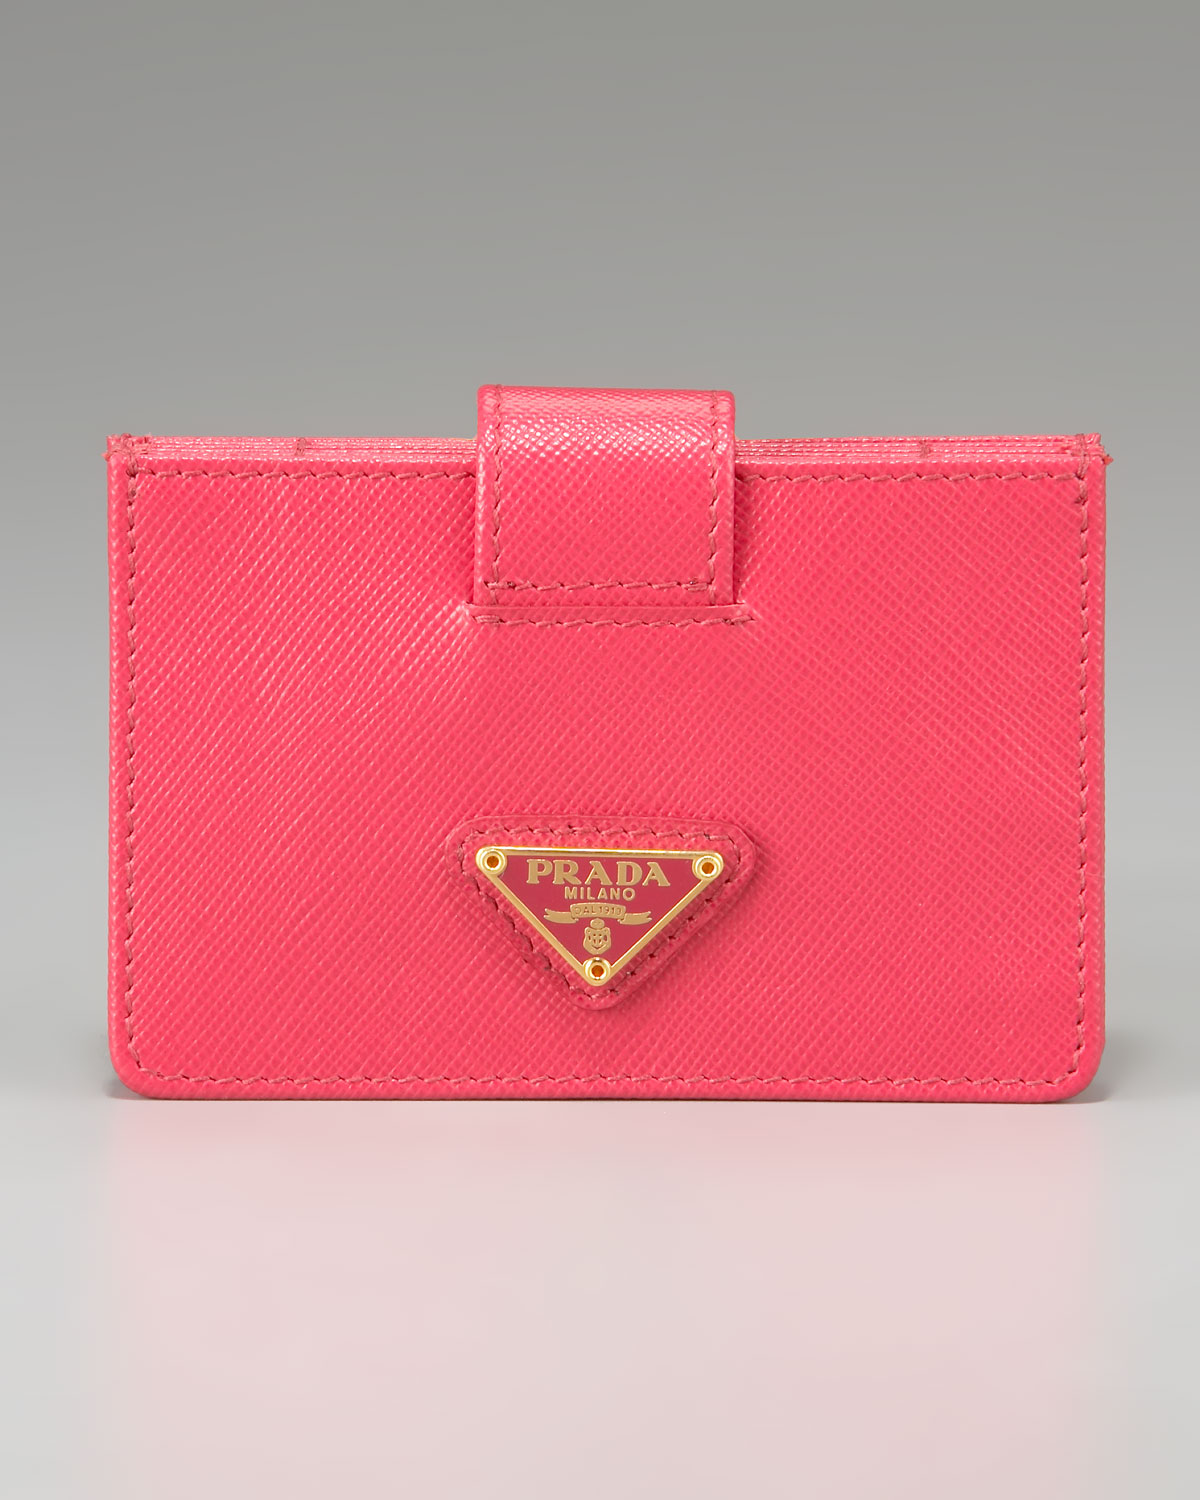 Prada Saffiano Leather Accordion Card Case in Pink - Lyst